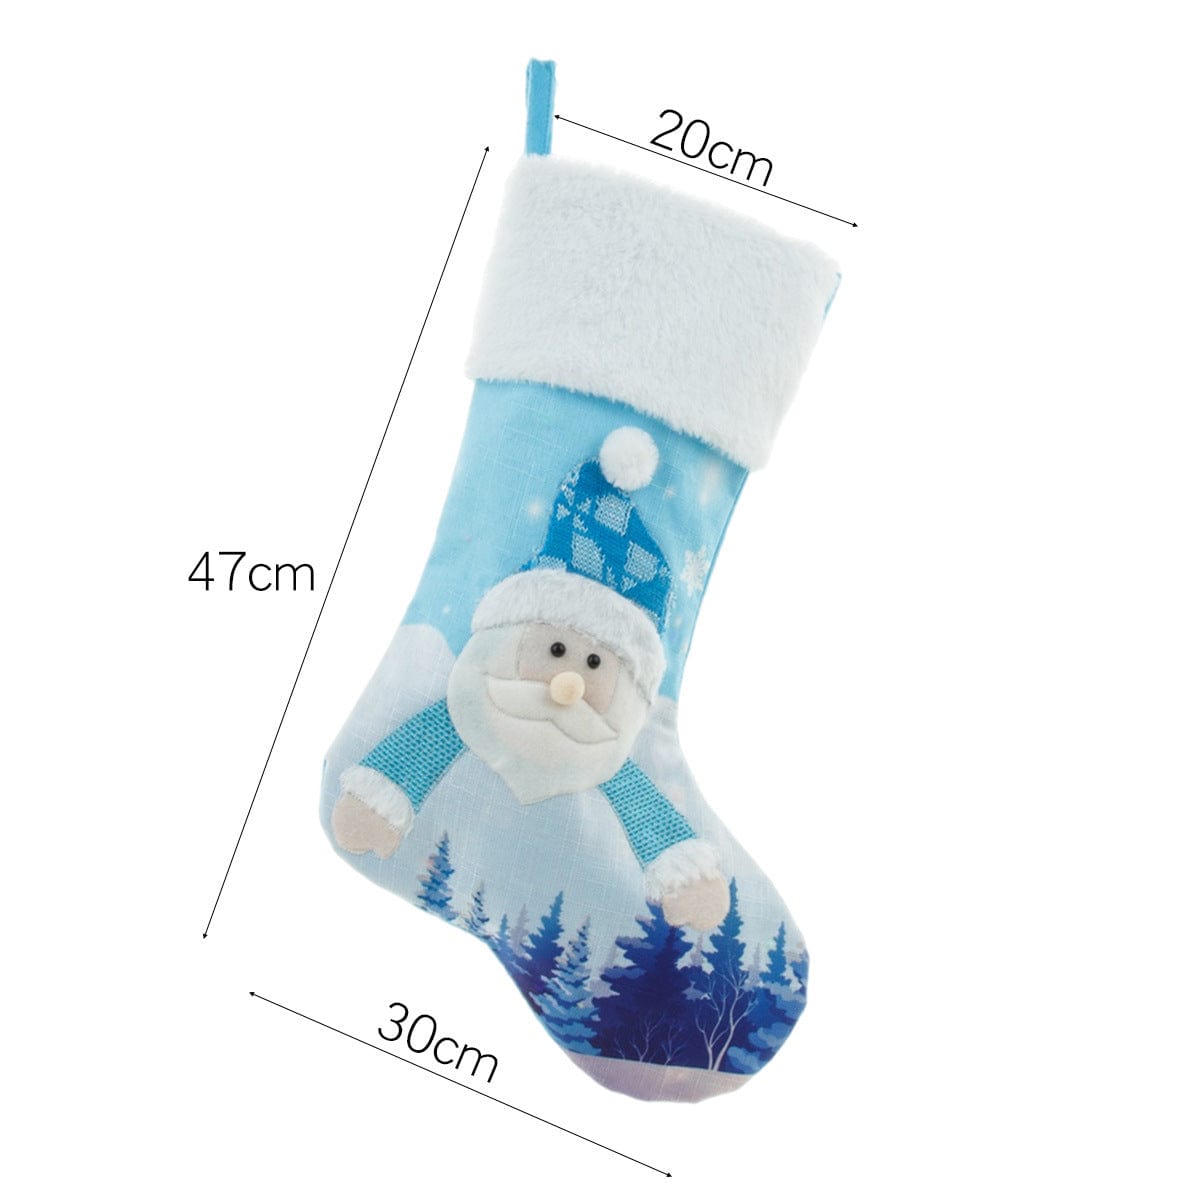 LOVEMI  Christmas Santa Claus Lovemi -  New Year Christmas Decor For Home Glowing Large Christmas Socks Gift Candy Bag With Lights Christmas Ornaments